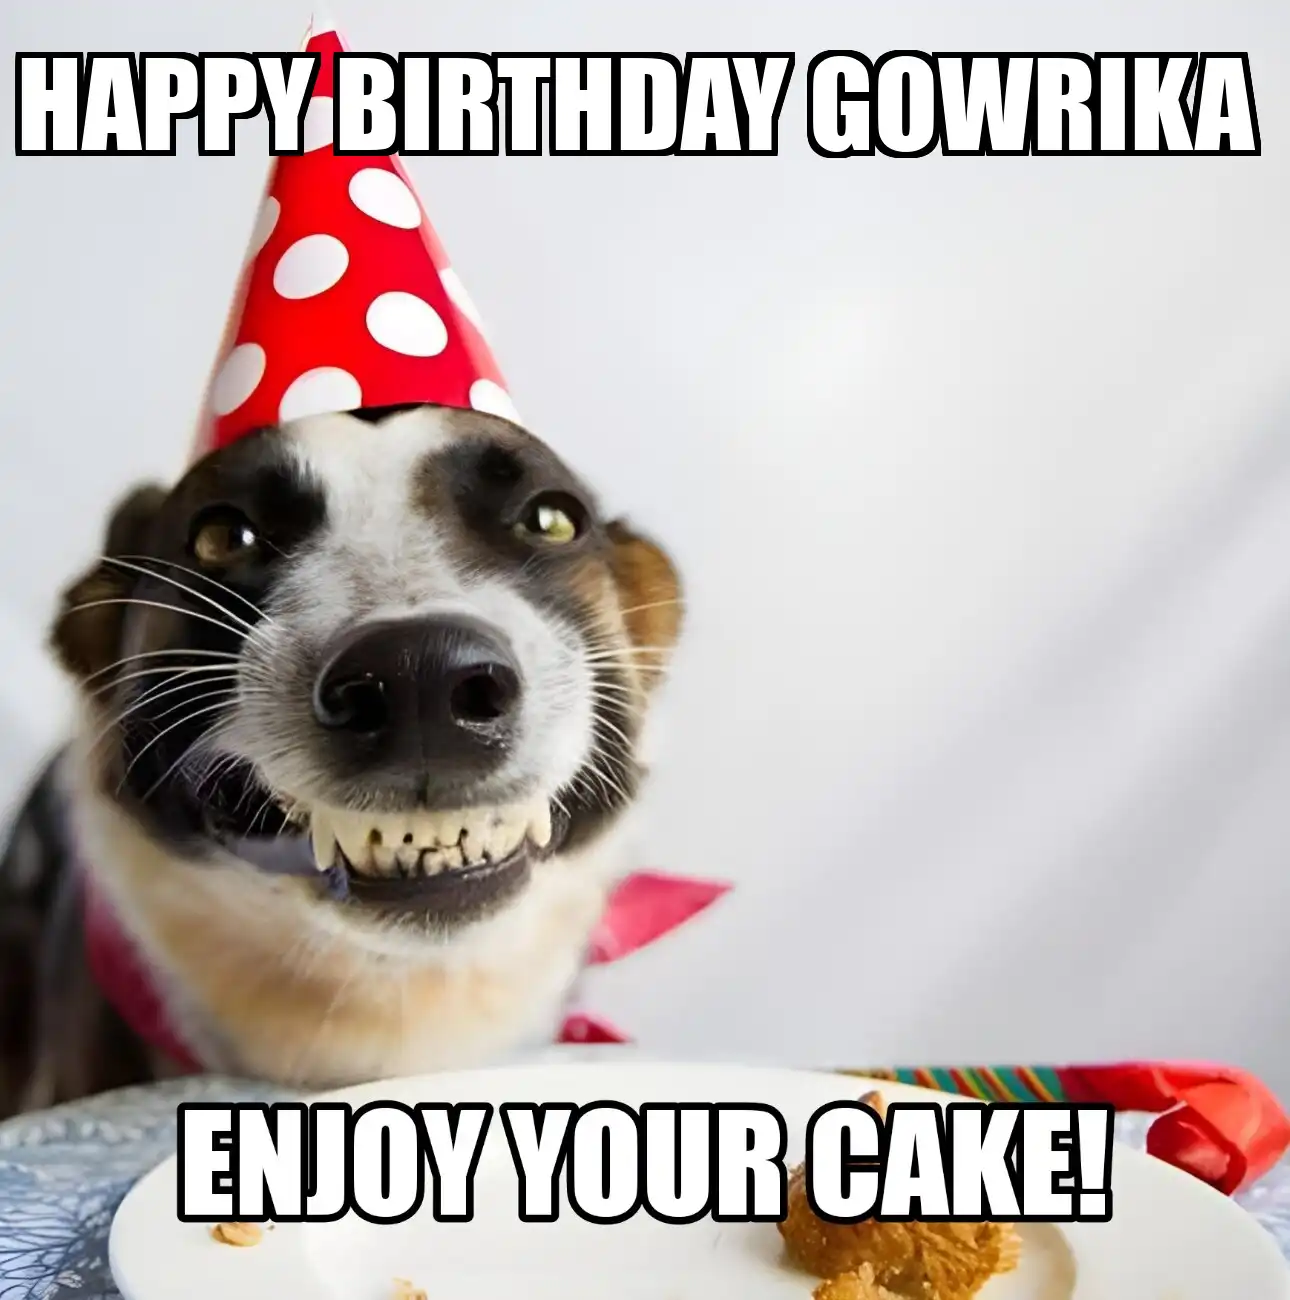 Happy Birthday Gowrika Enjoy Your Cake Dog Meme